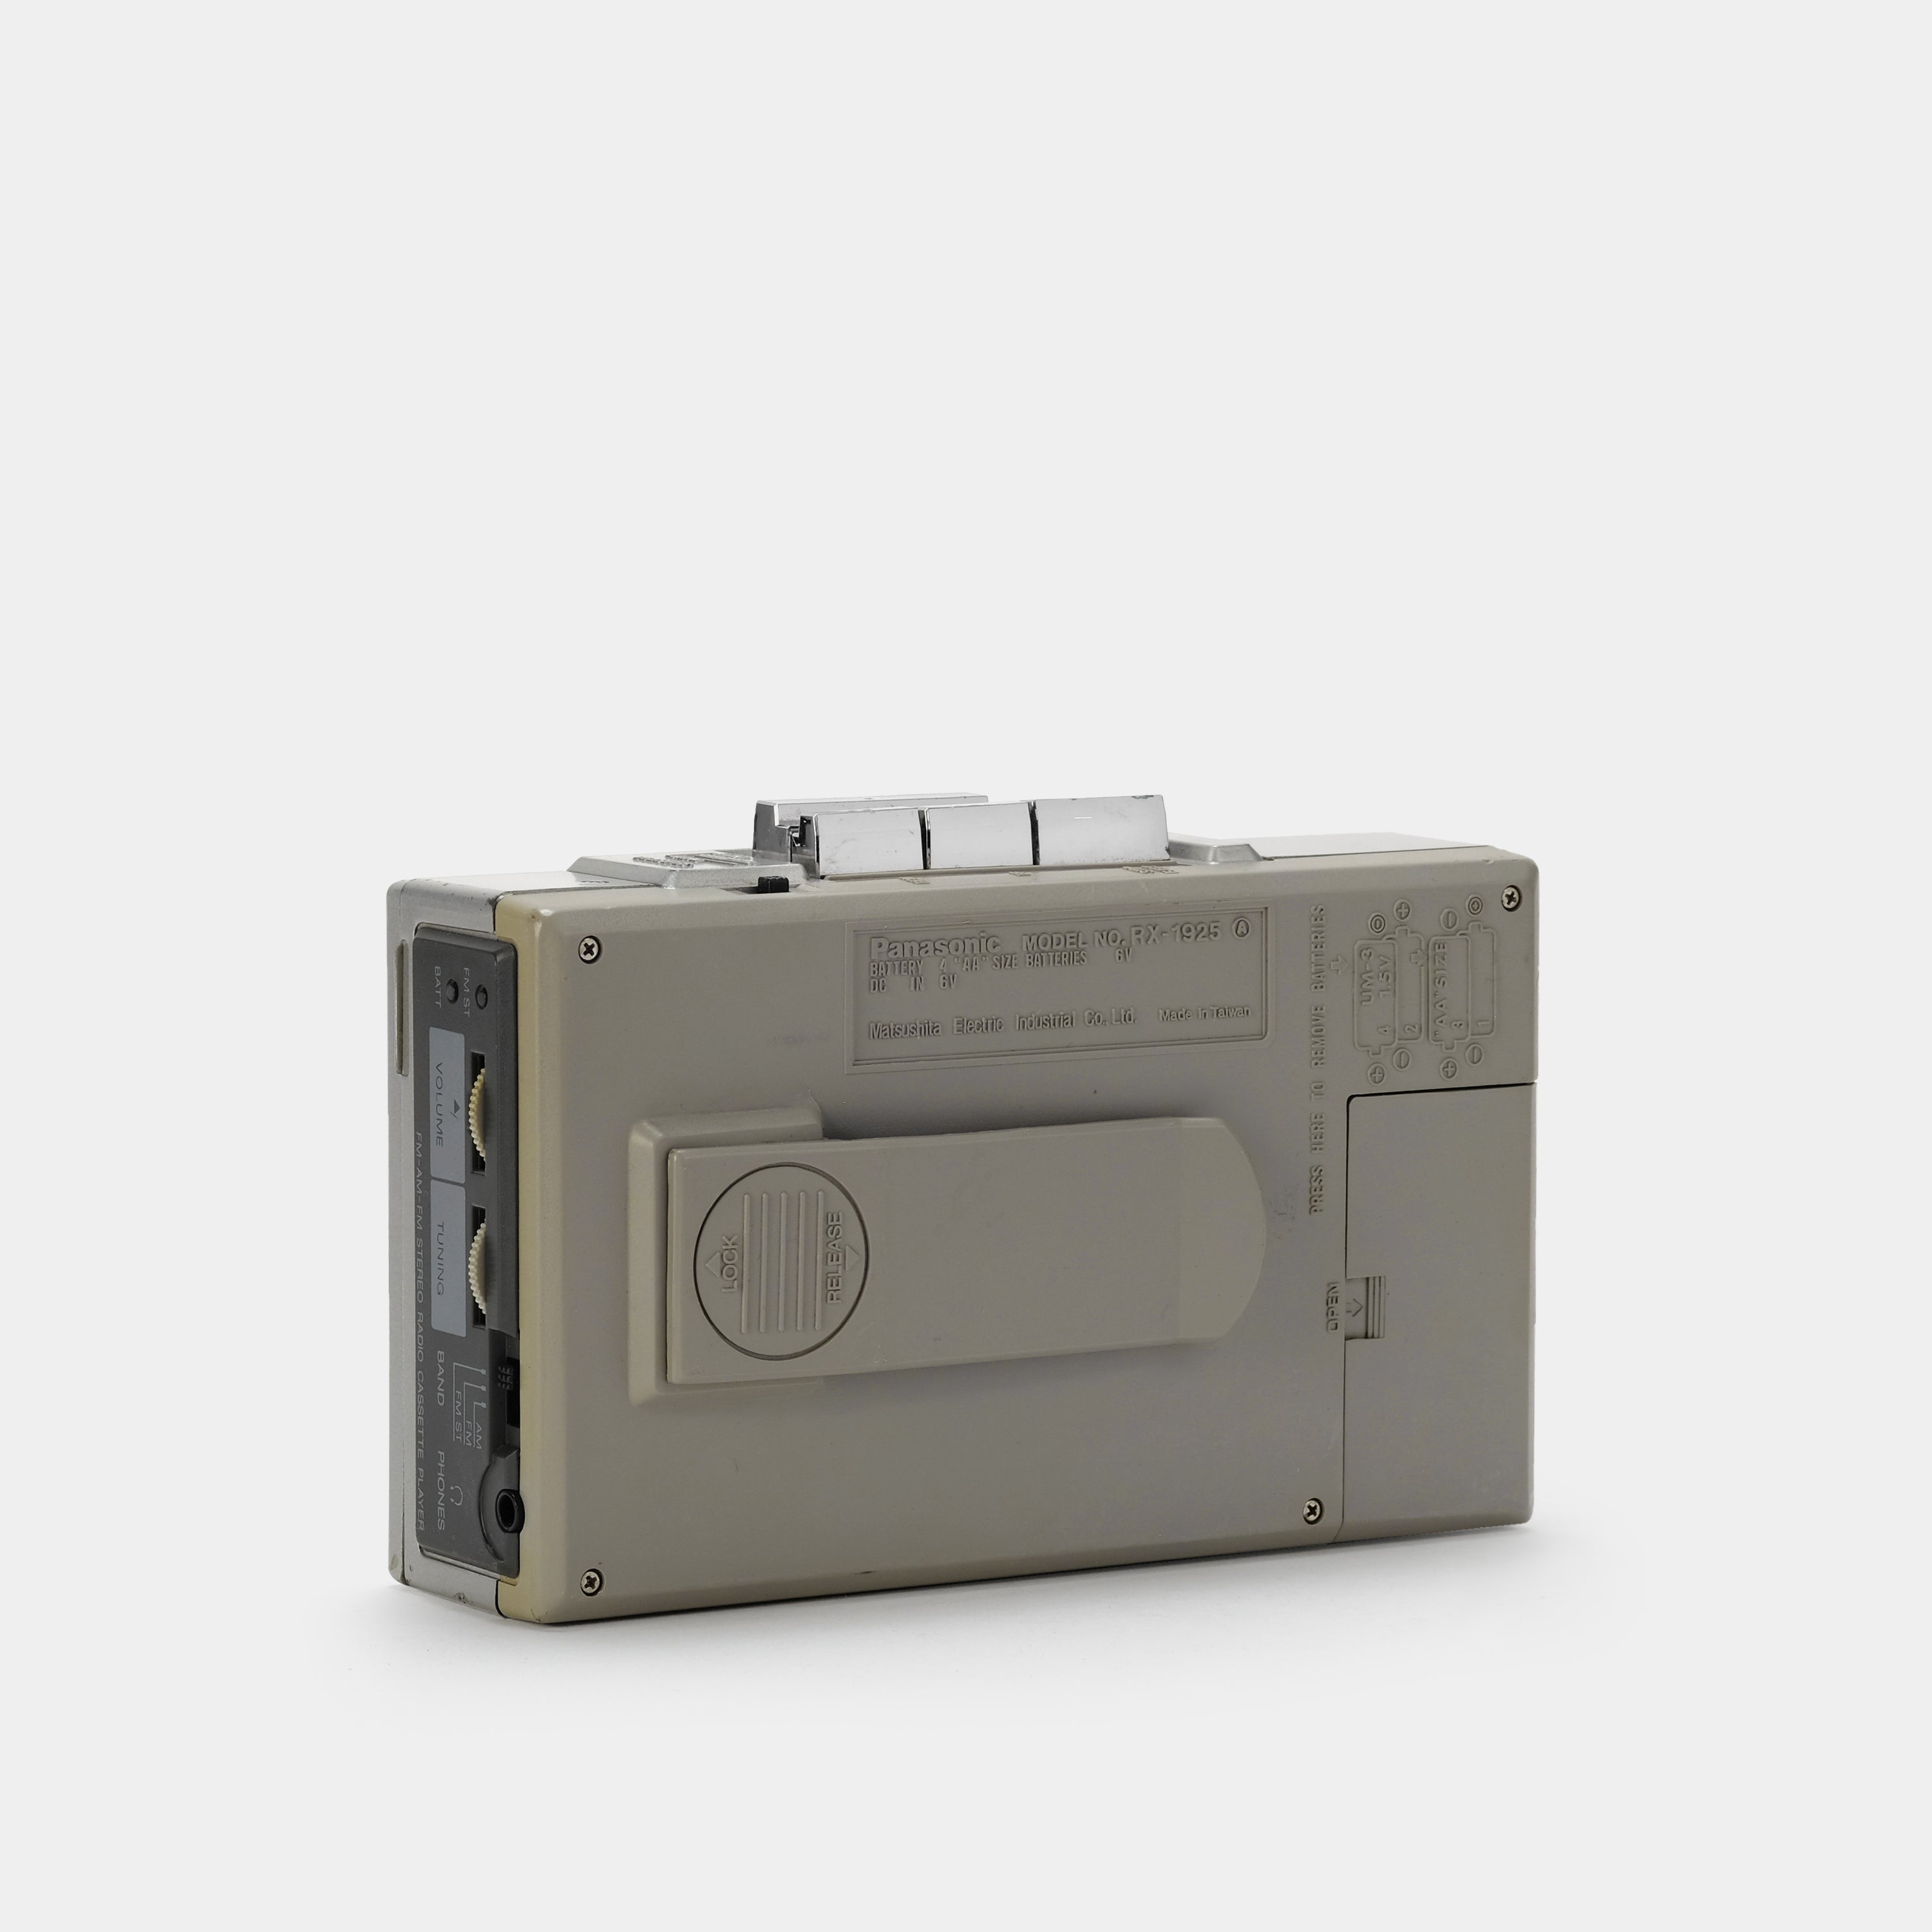 Panasonic RX-1925 Portable Stereo Cassette Player